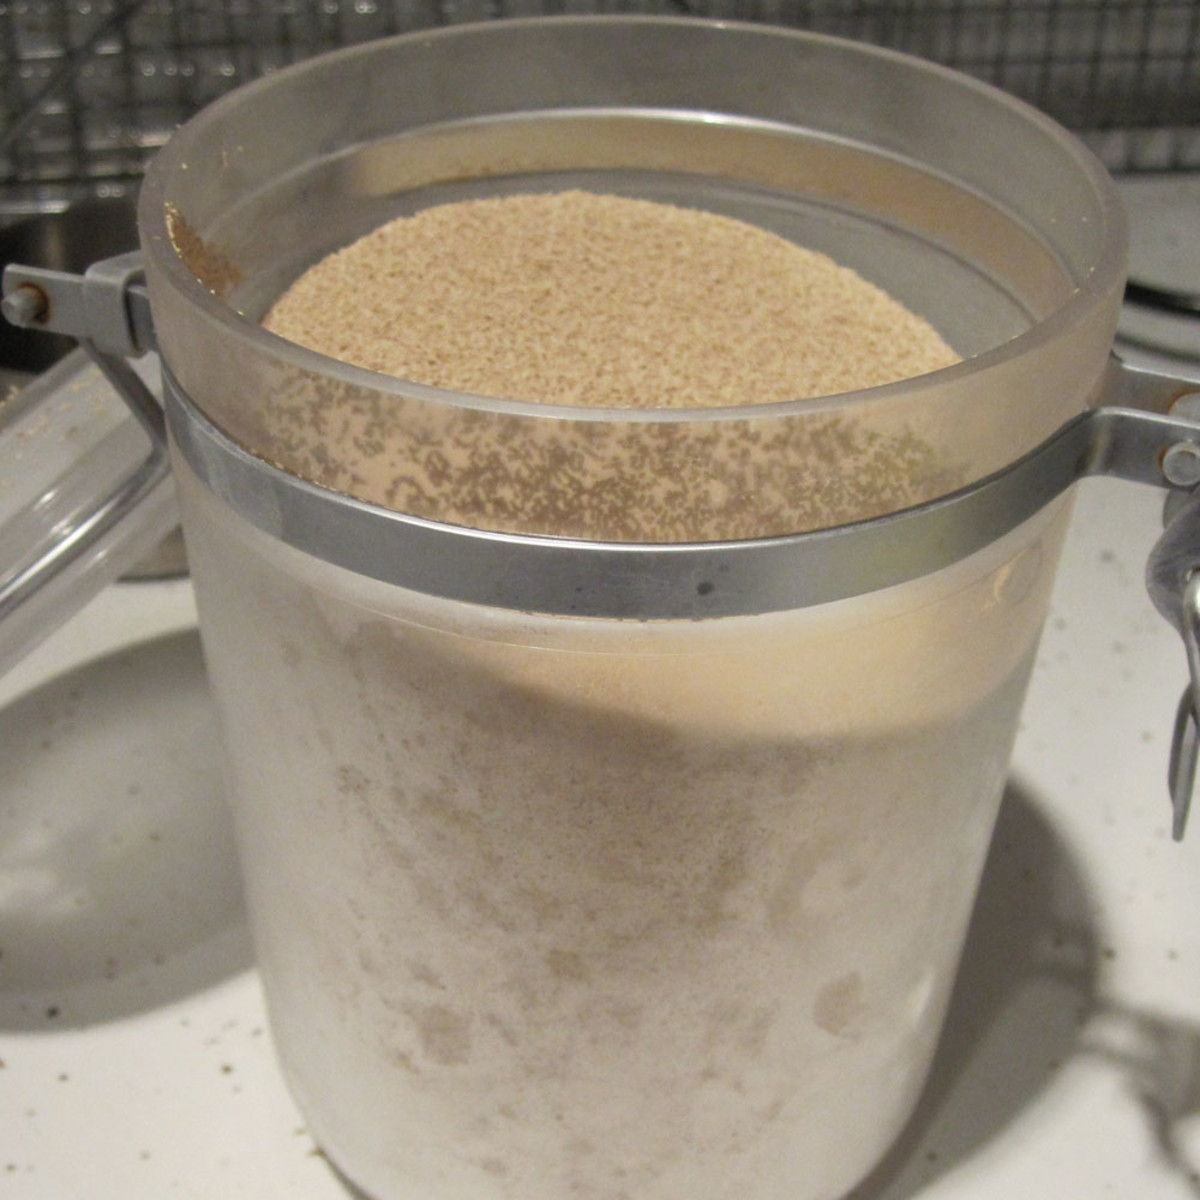 Bulk yeast in a freezer storage container